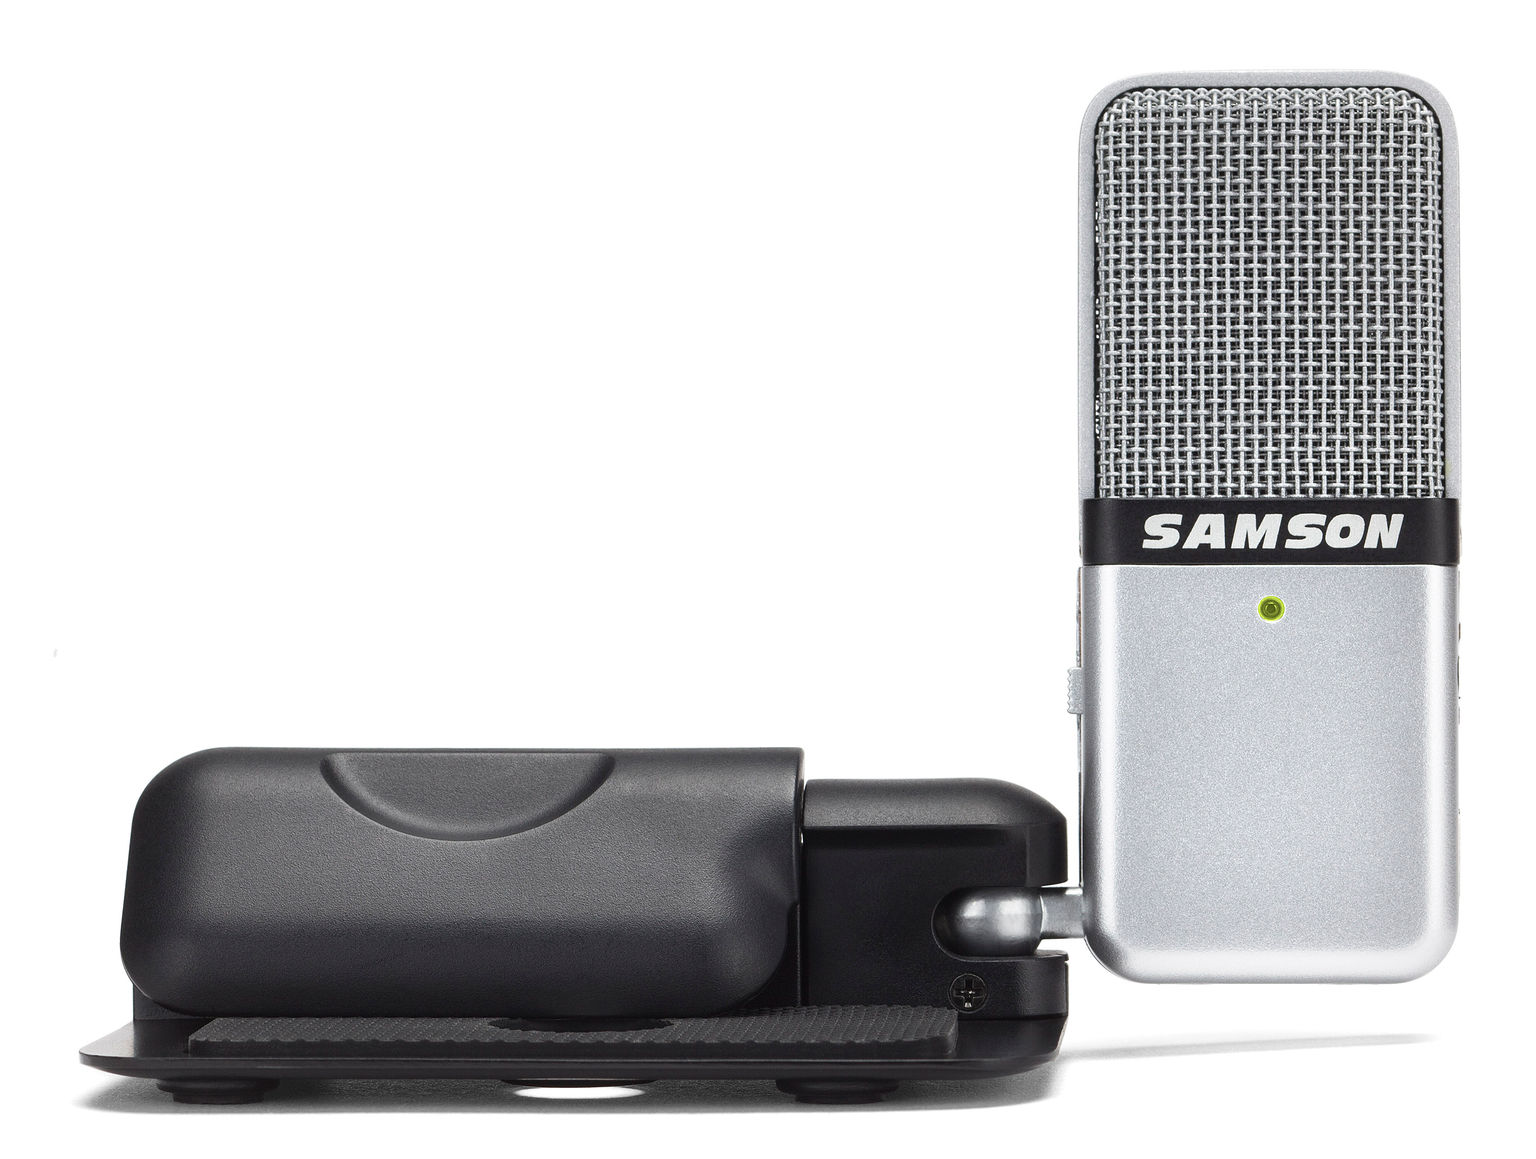 Samson Go - Best compact ASMR mic